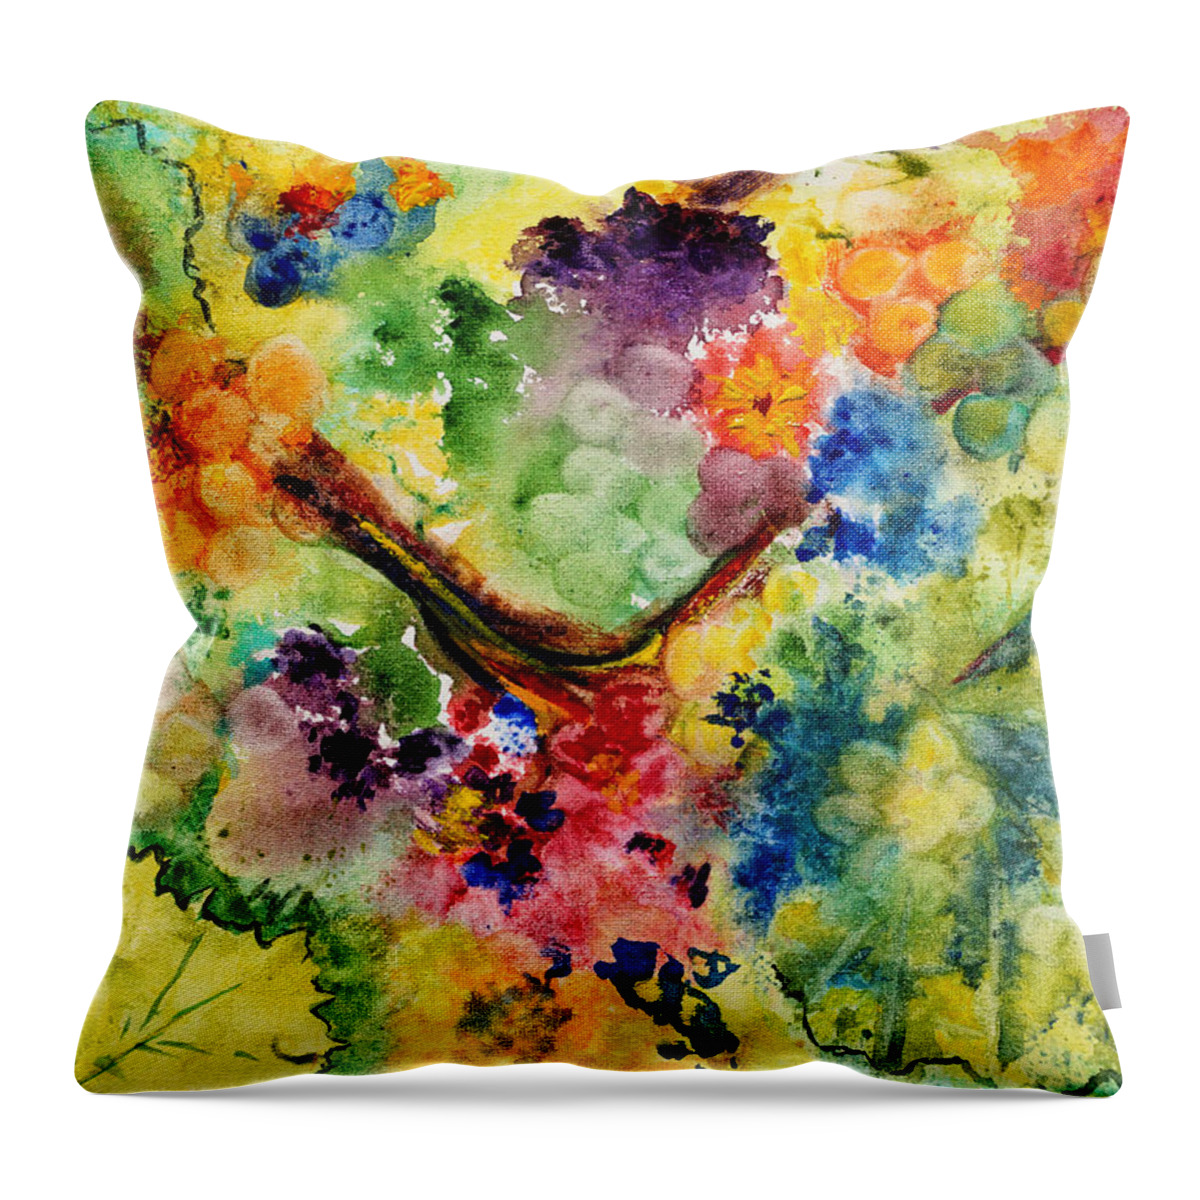 Grapes Throw Pillow featuring the painting Springtime by Karen Fleschler